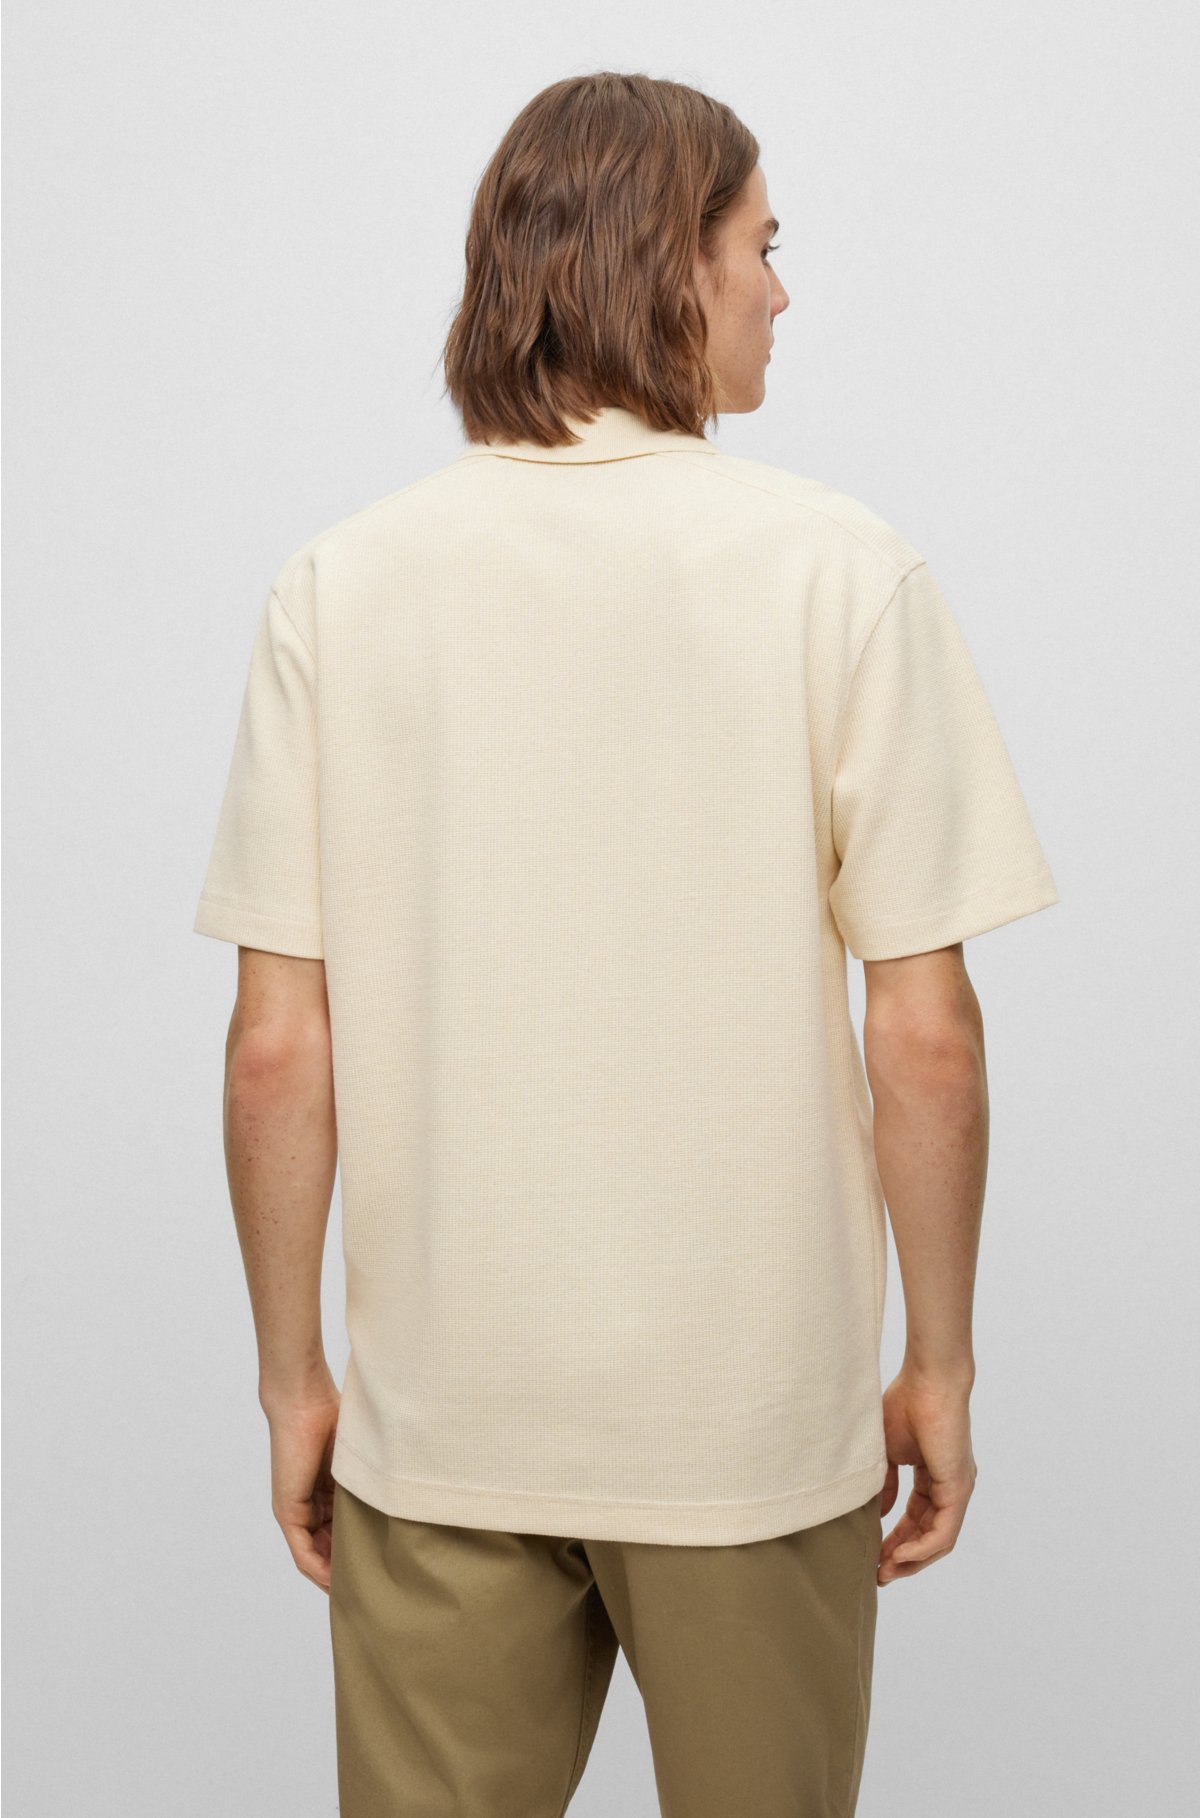 Loose-fit Cotton Polo Shirt Wonwhi Adidas - Men